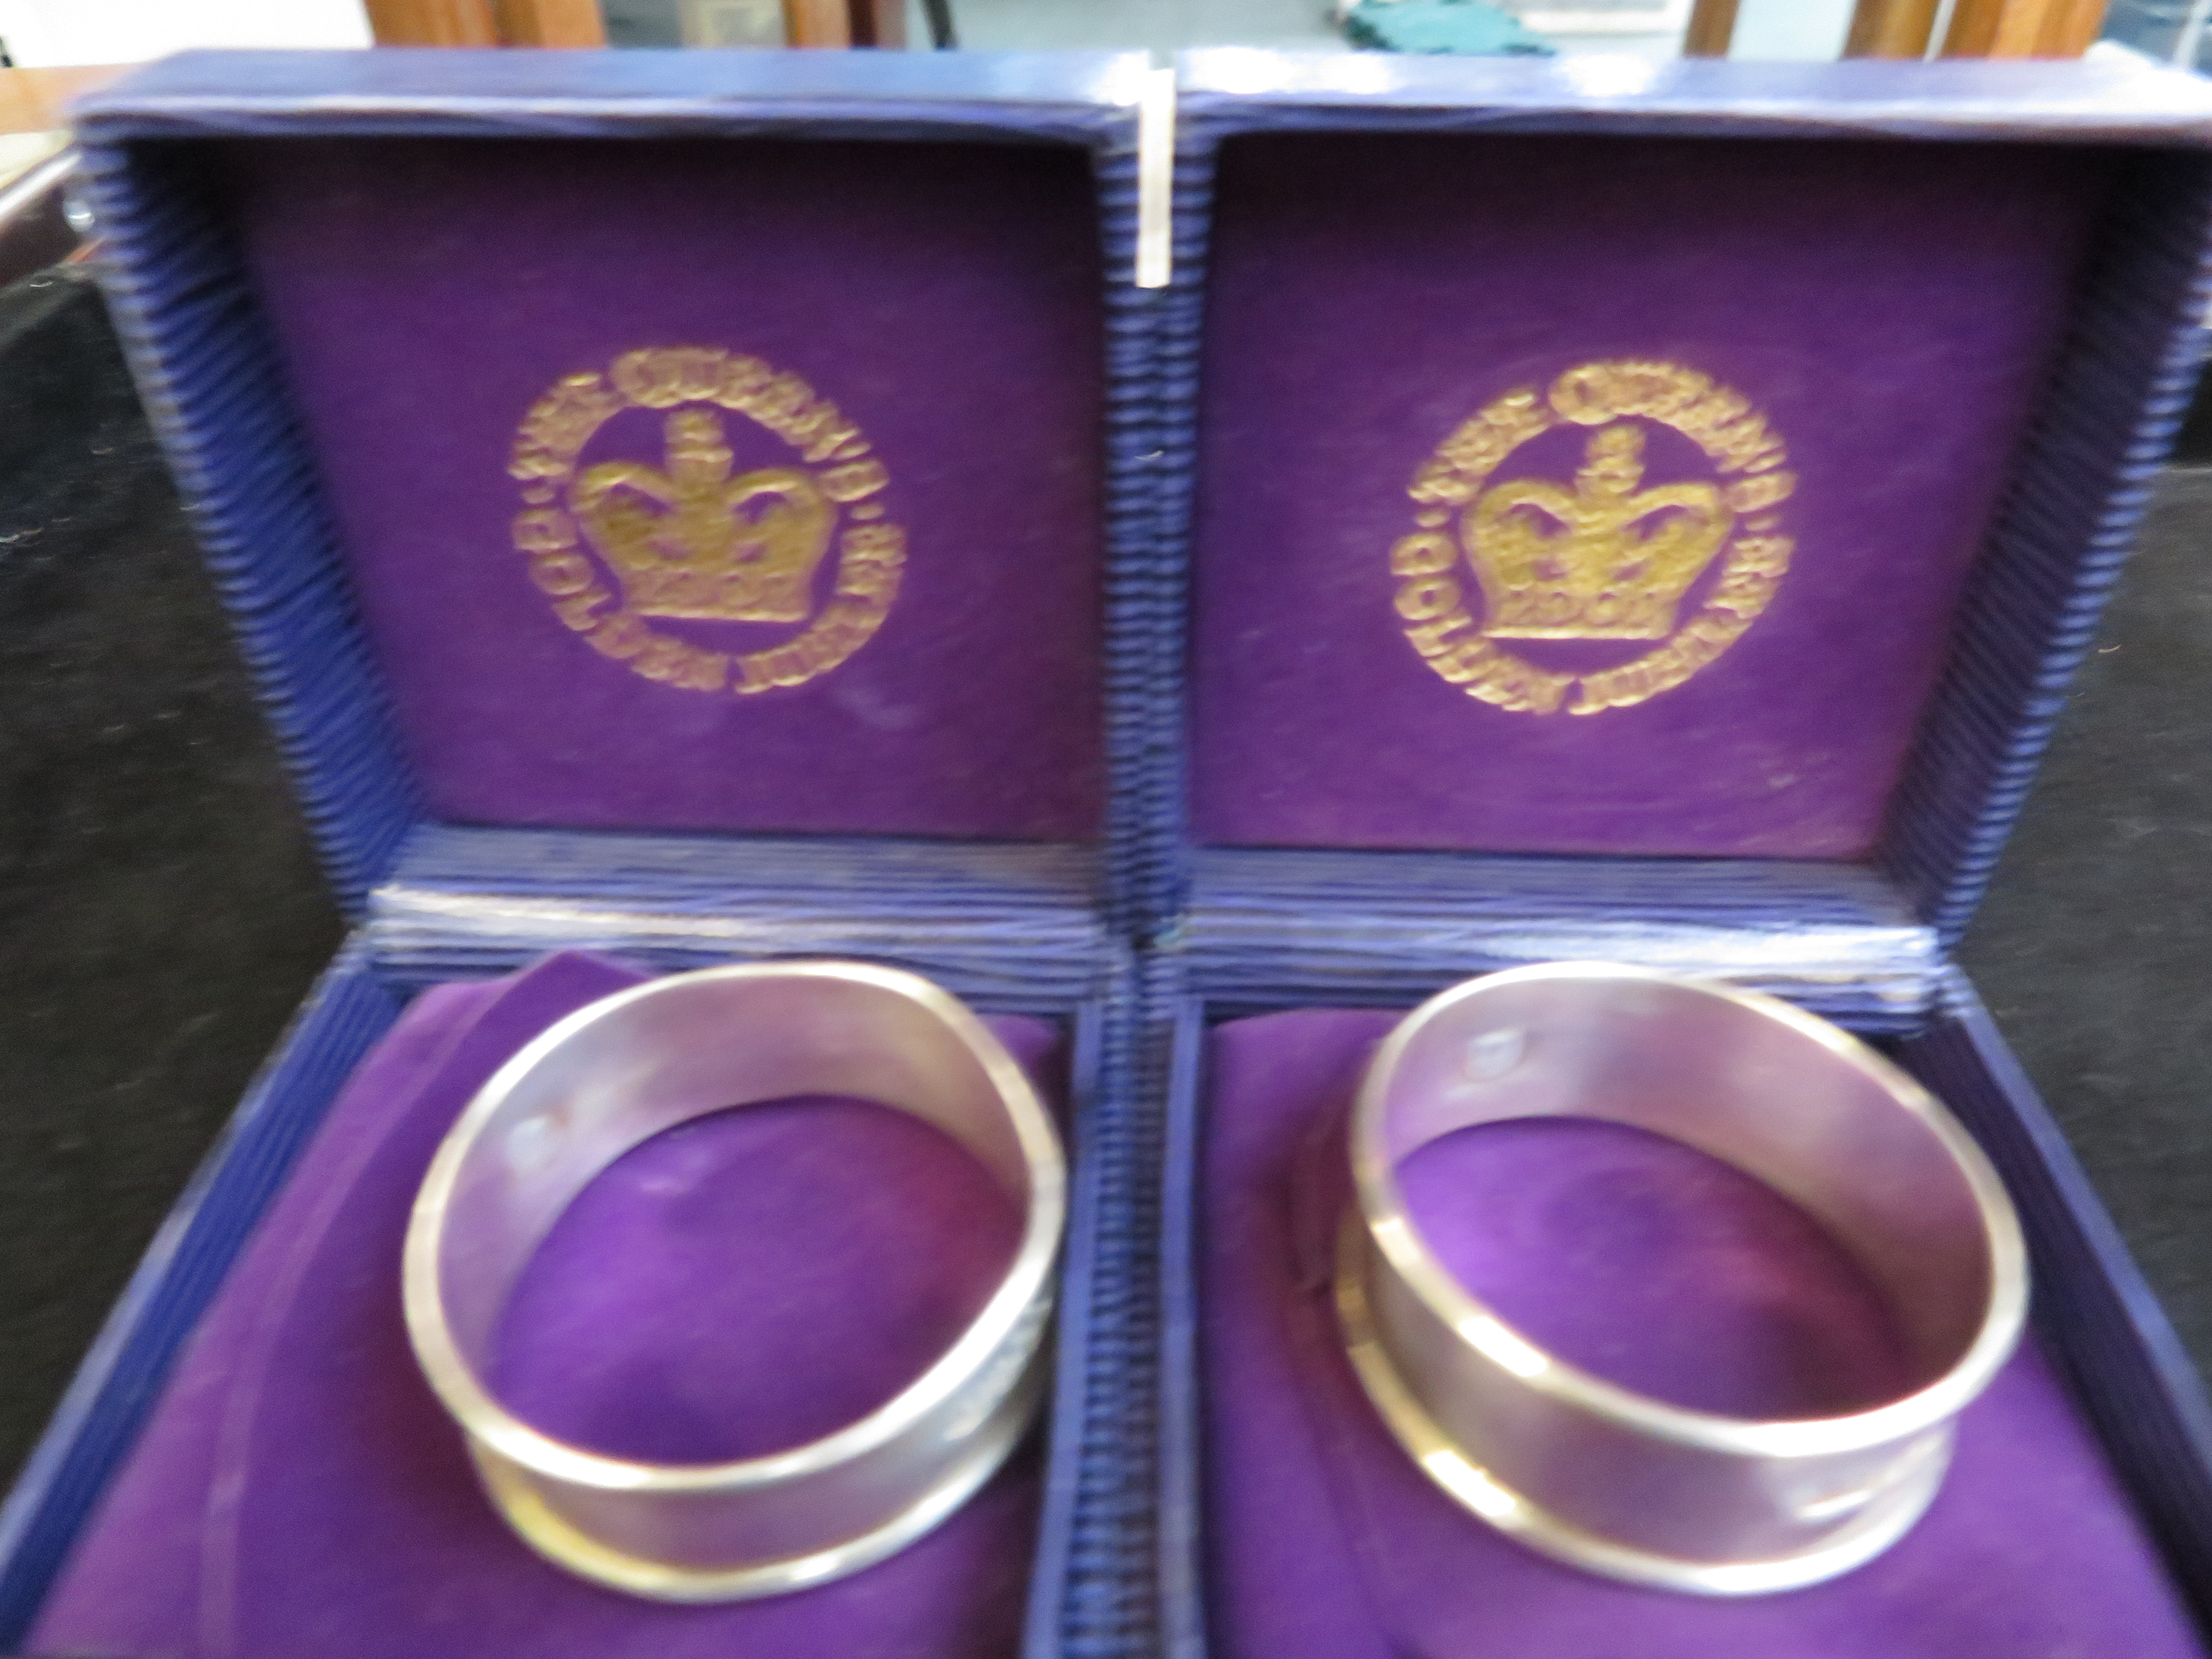 Pair of cased silver jubilee napkin rings